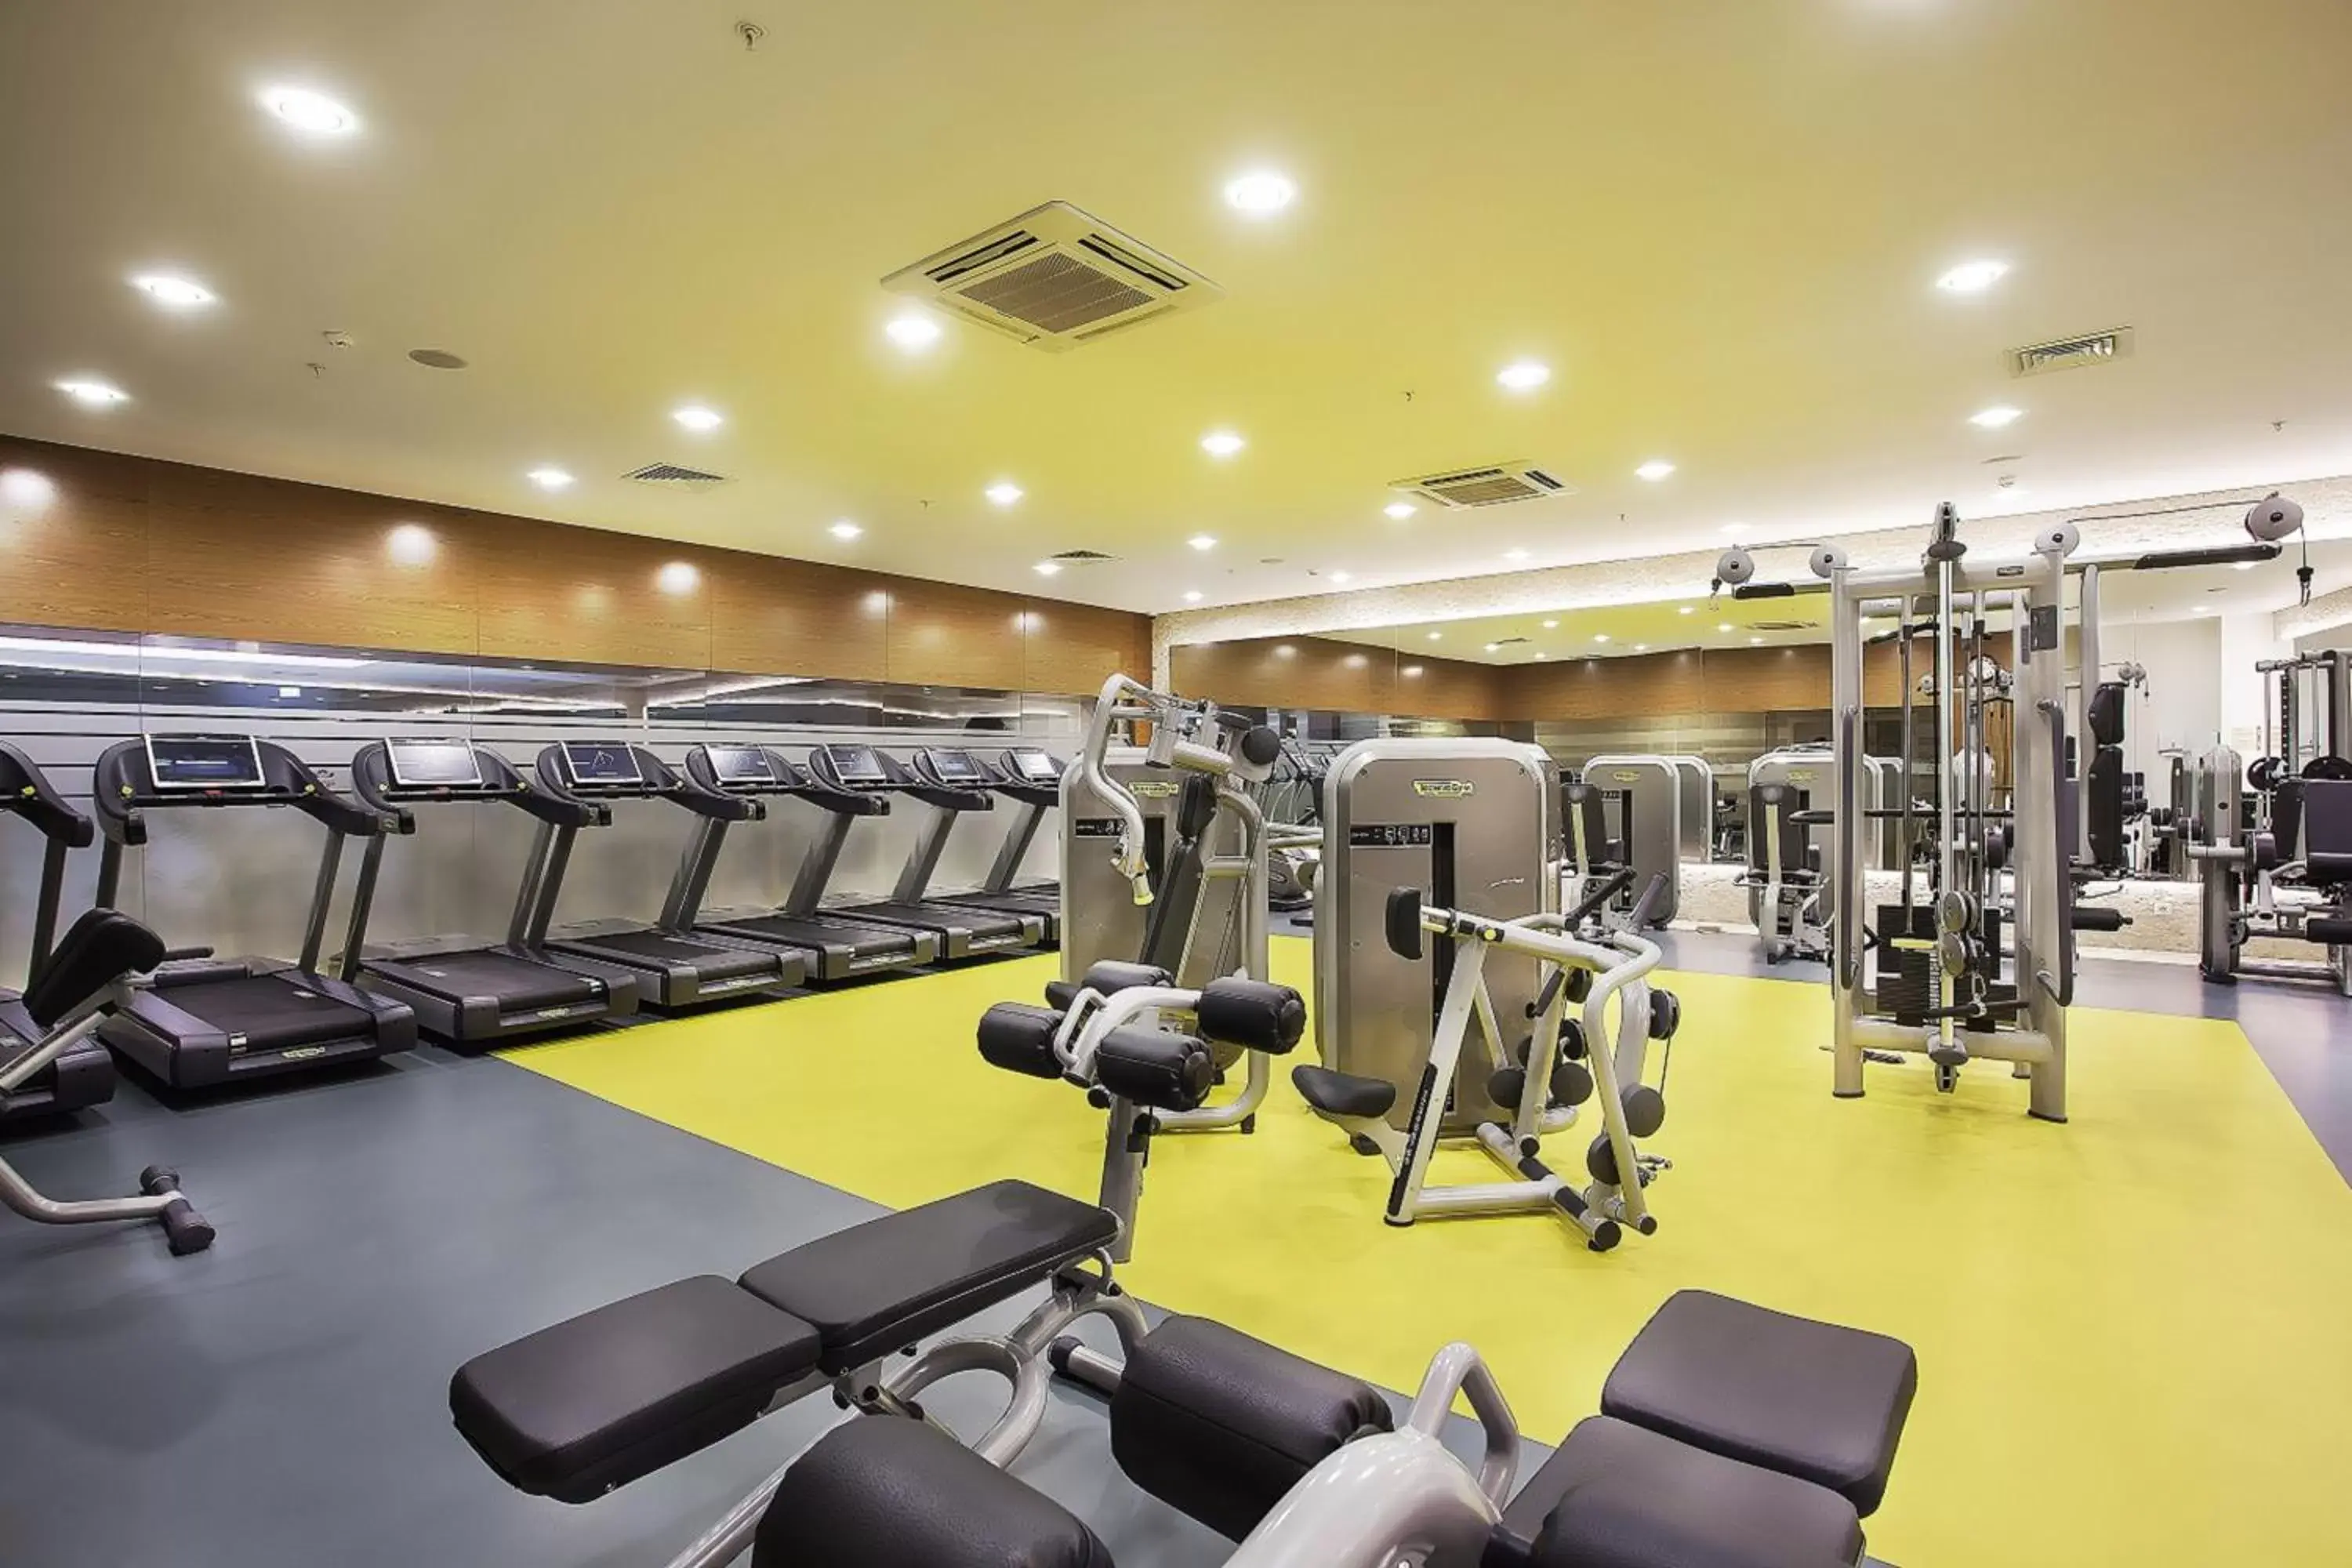 Fitness centre/facilities, Fitness Center/Facilities in Divan Gaziantep